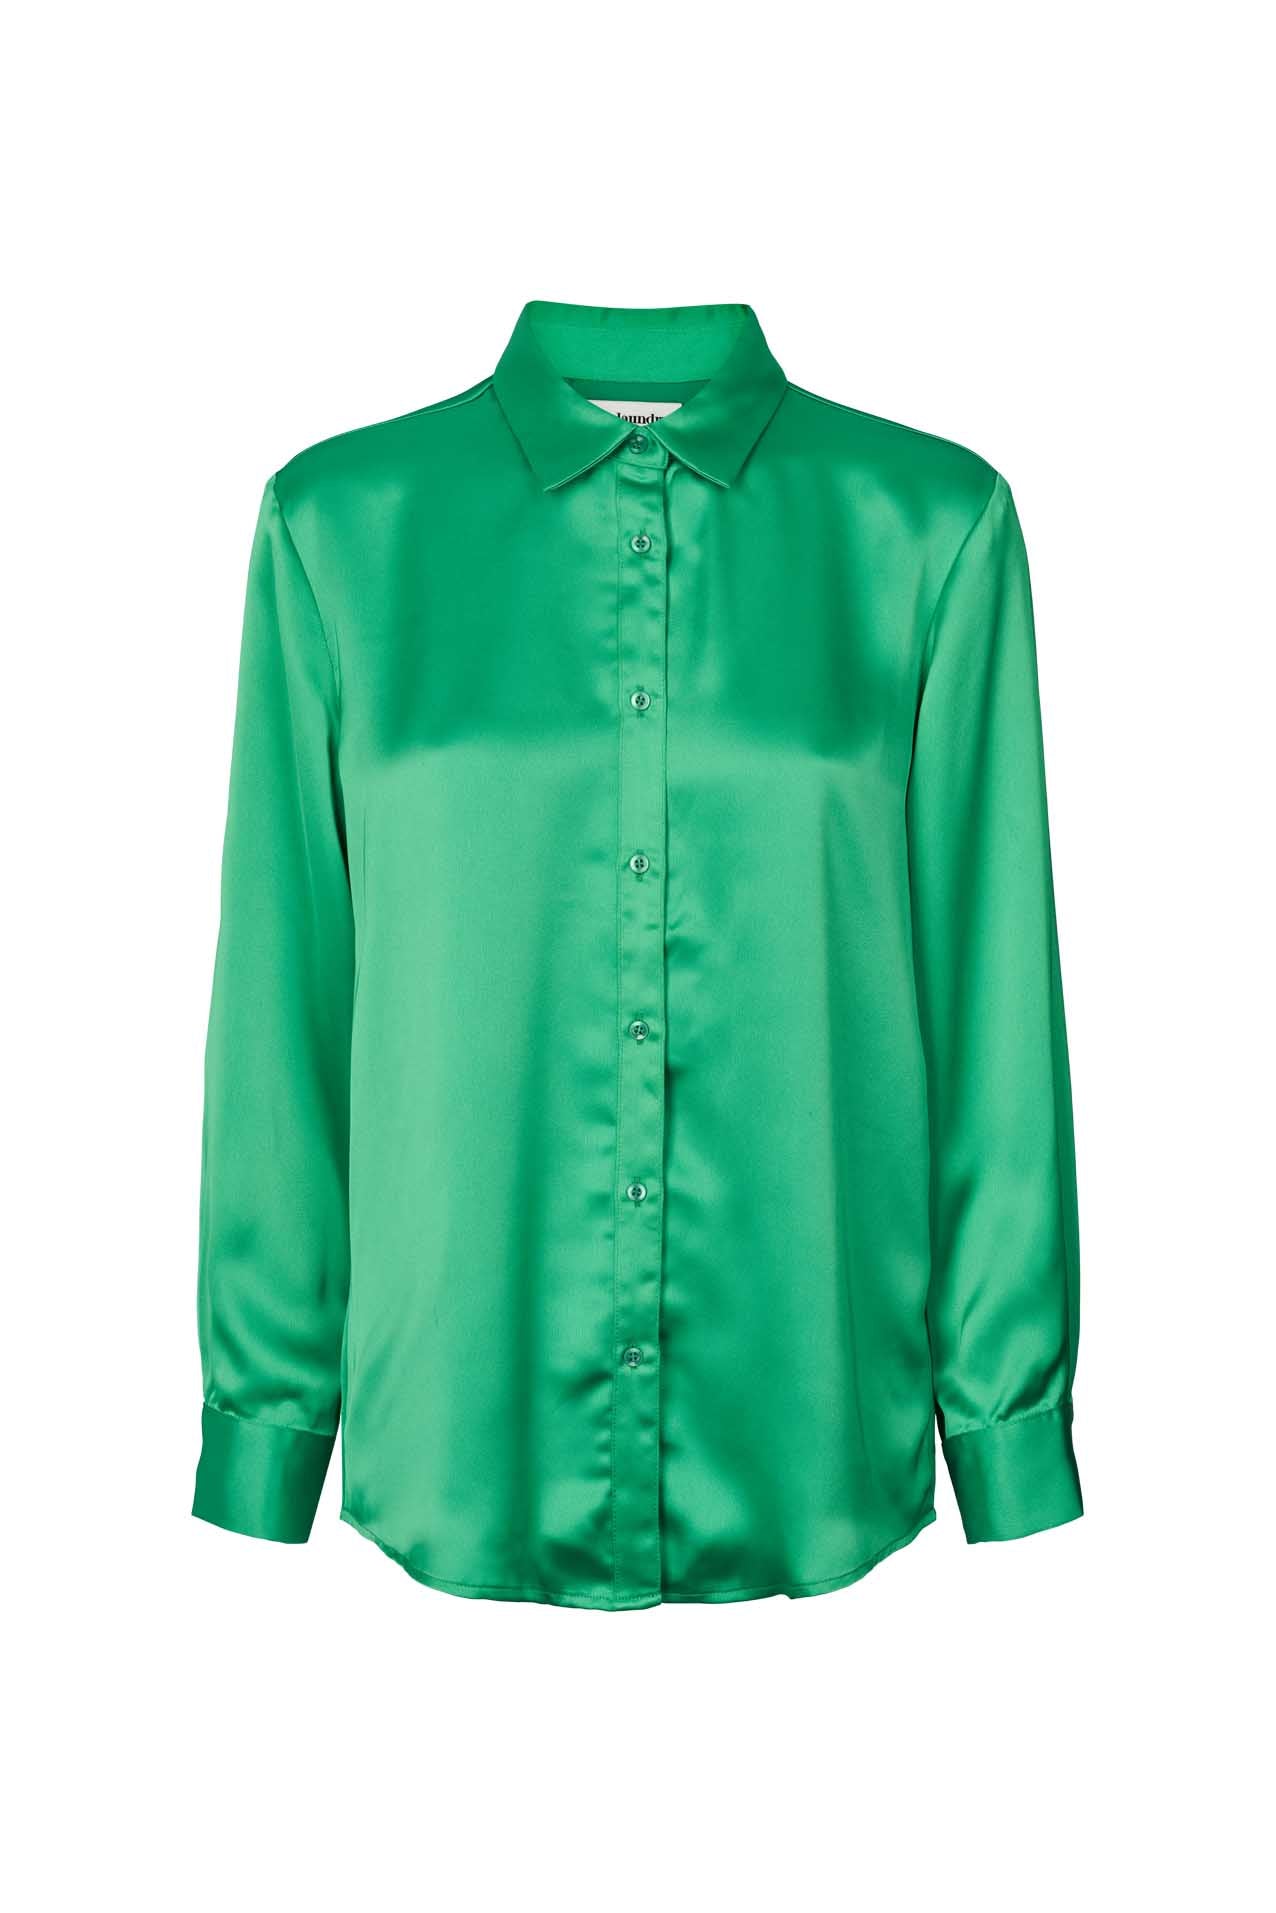 Lollys Laundry Kayla Shirt Shirt 40 Green